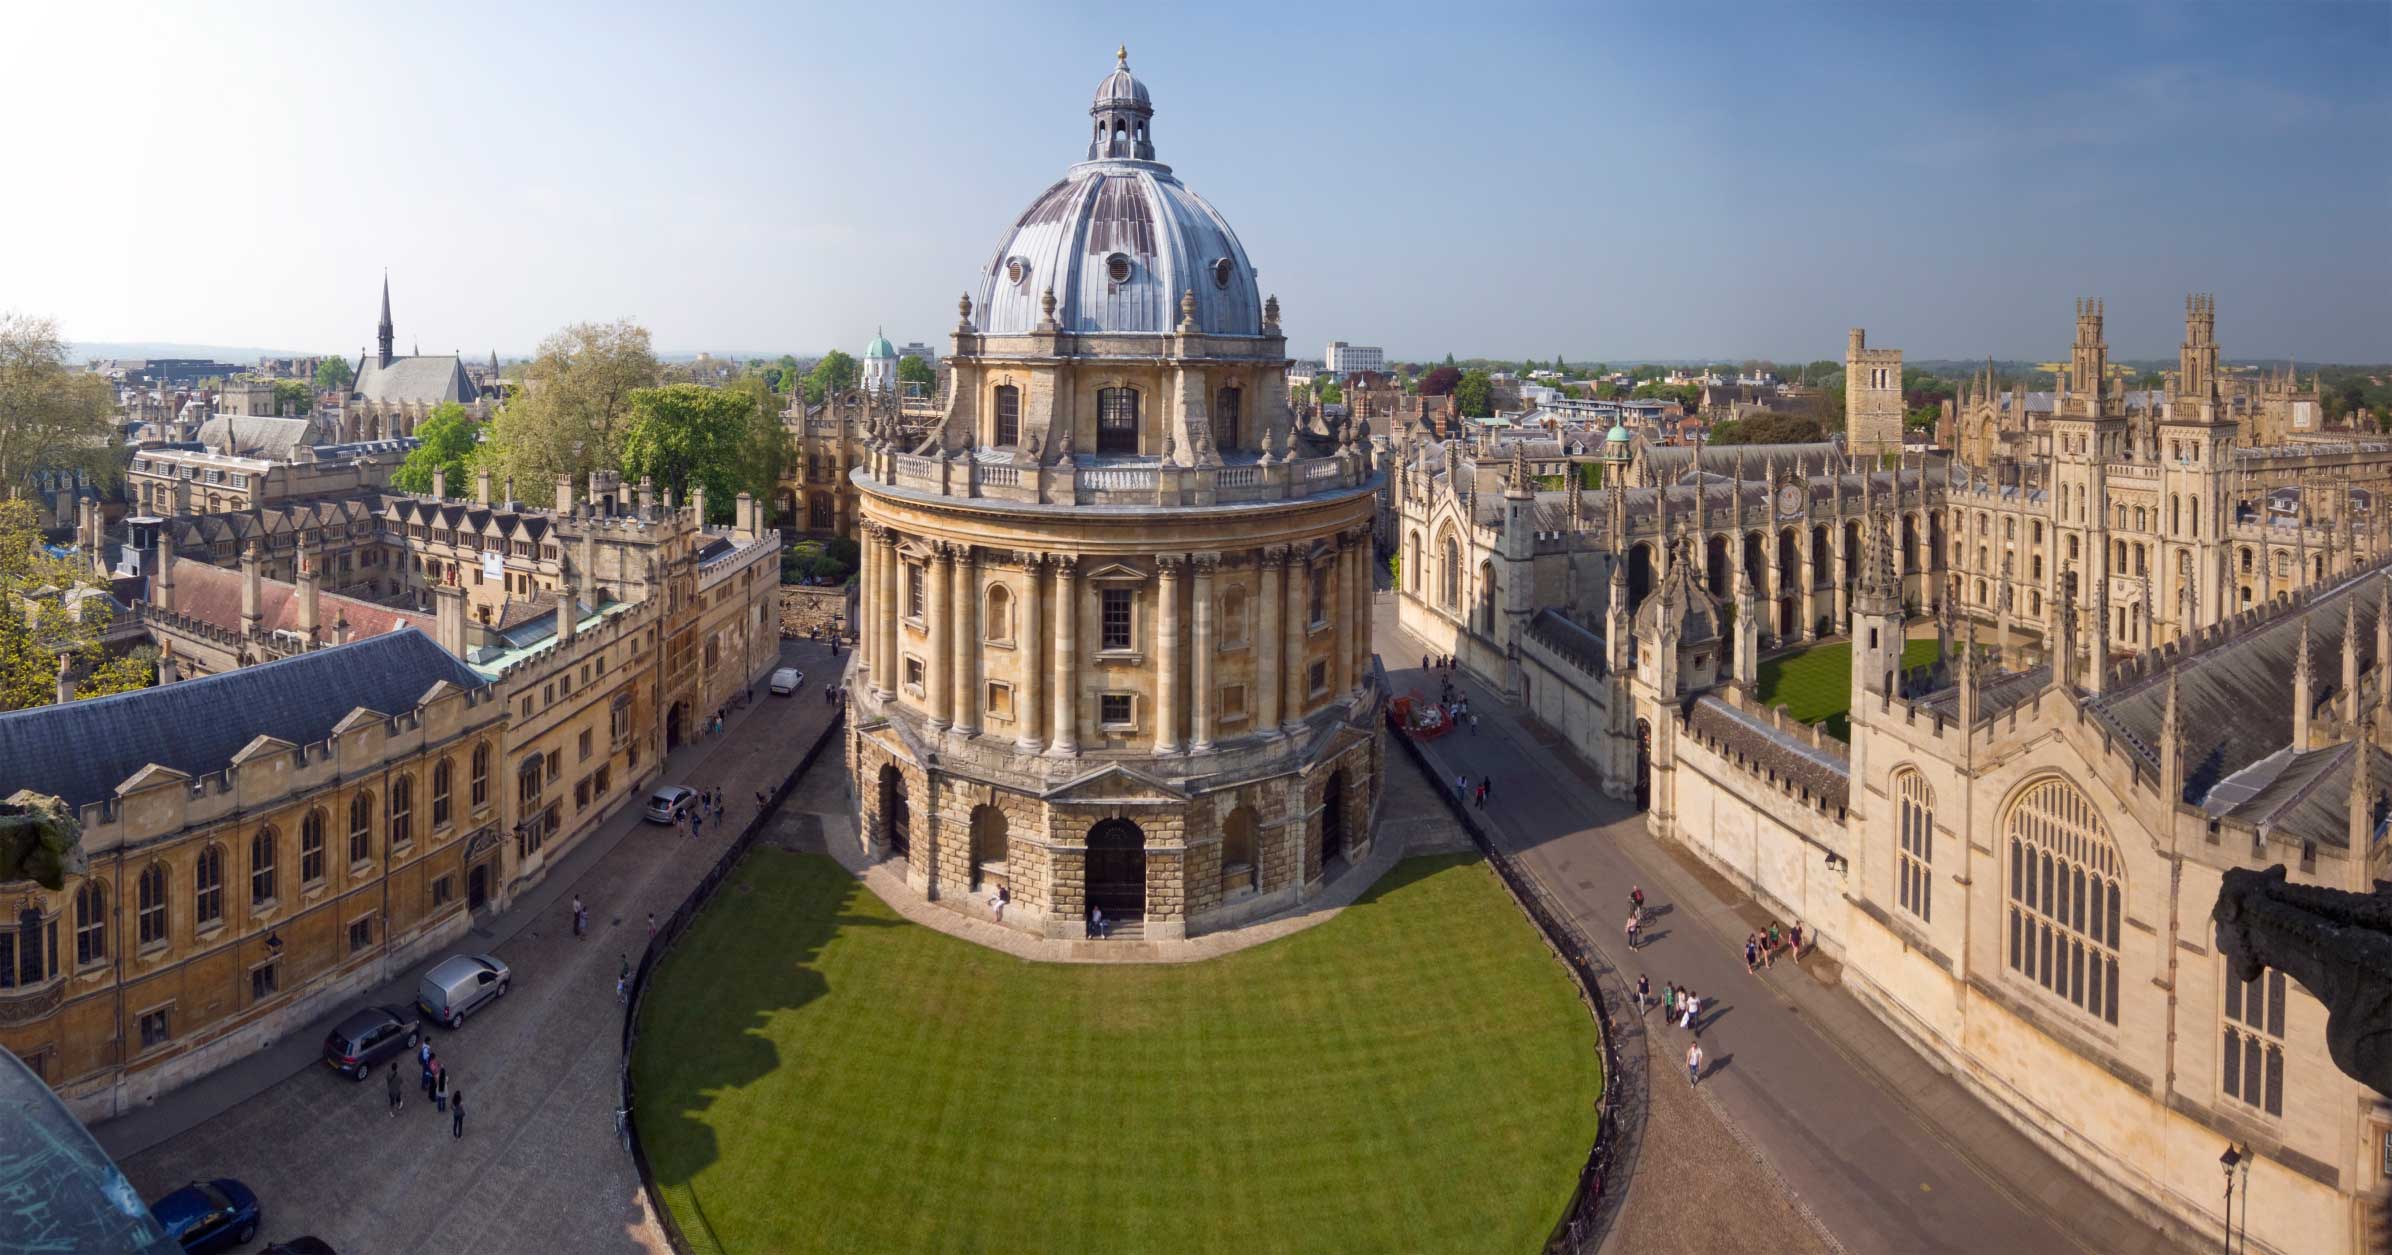 Building in Oxford